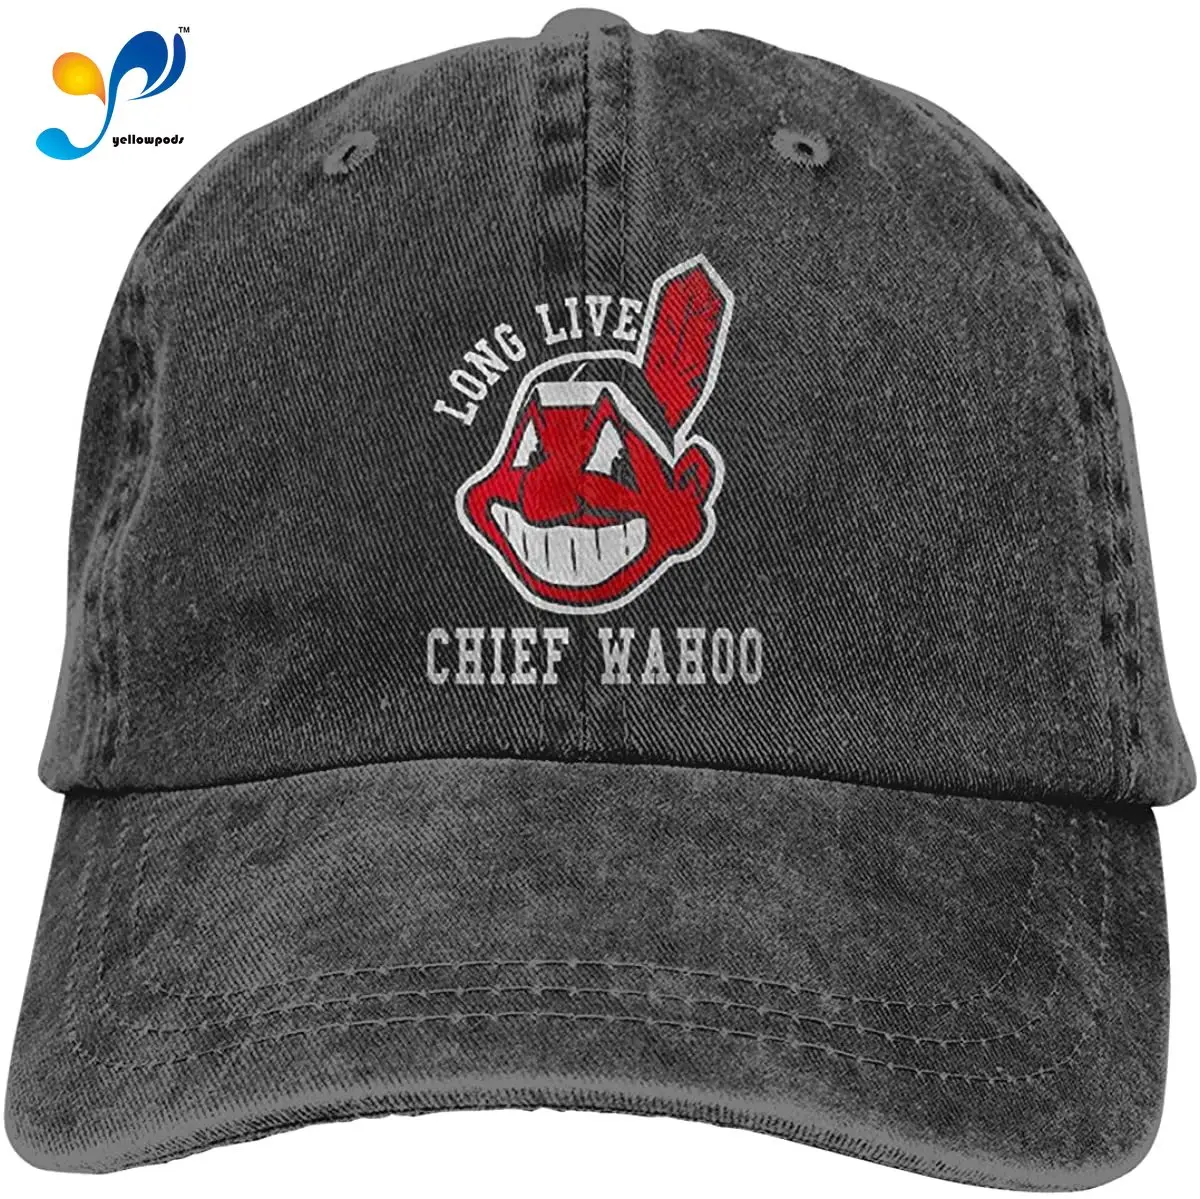 

AiFuShi Long Live Chief Wahoo Sports Denim Cap Adjustable Snapback Casquettes Unisex Plain Baseball Cowboy Hat Black